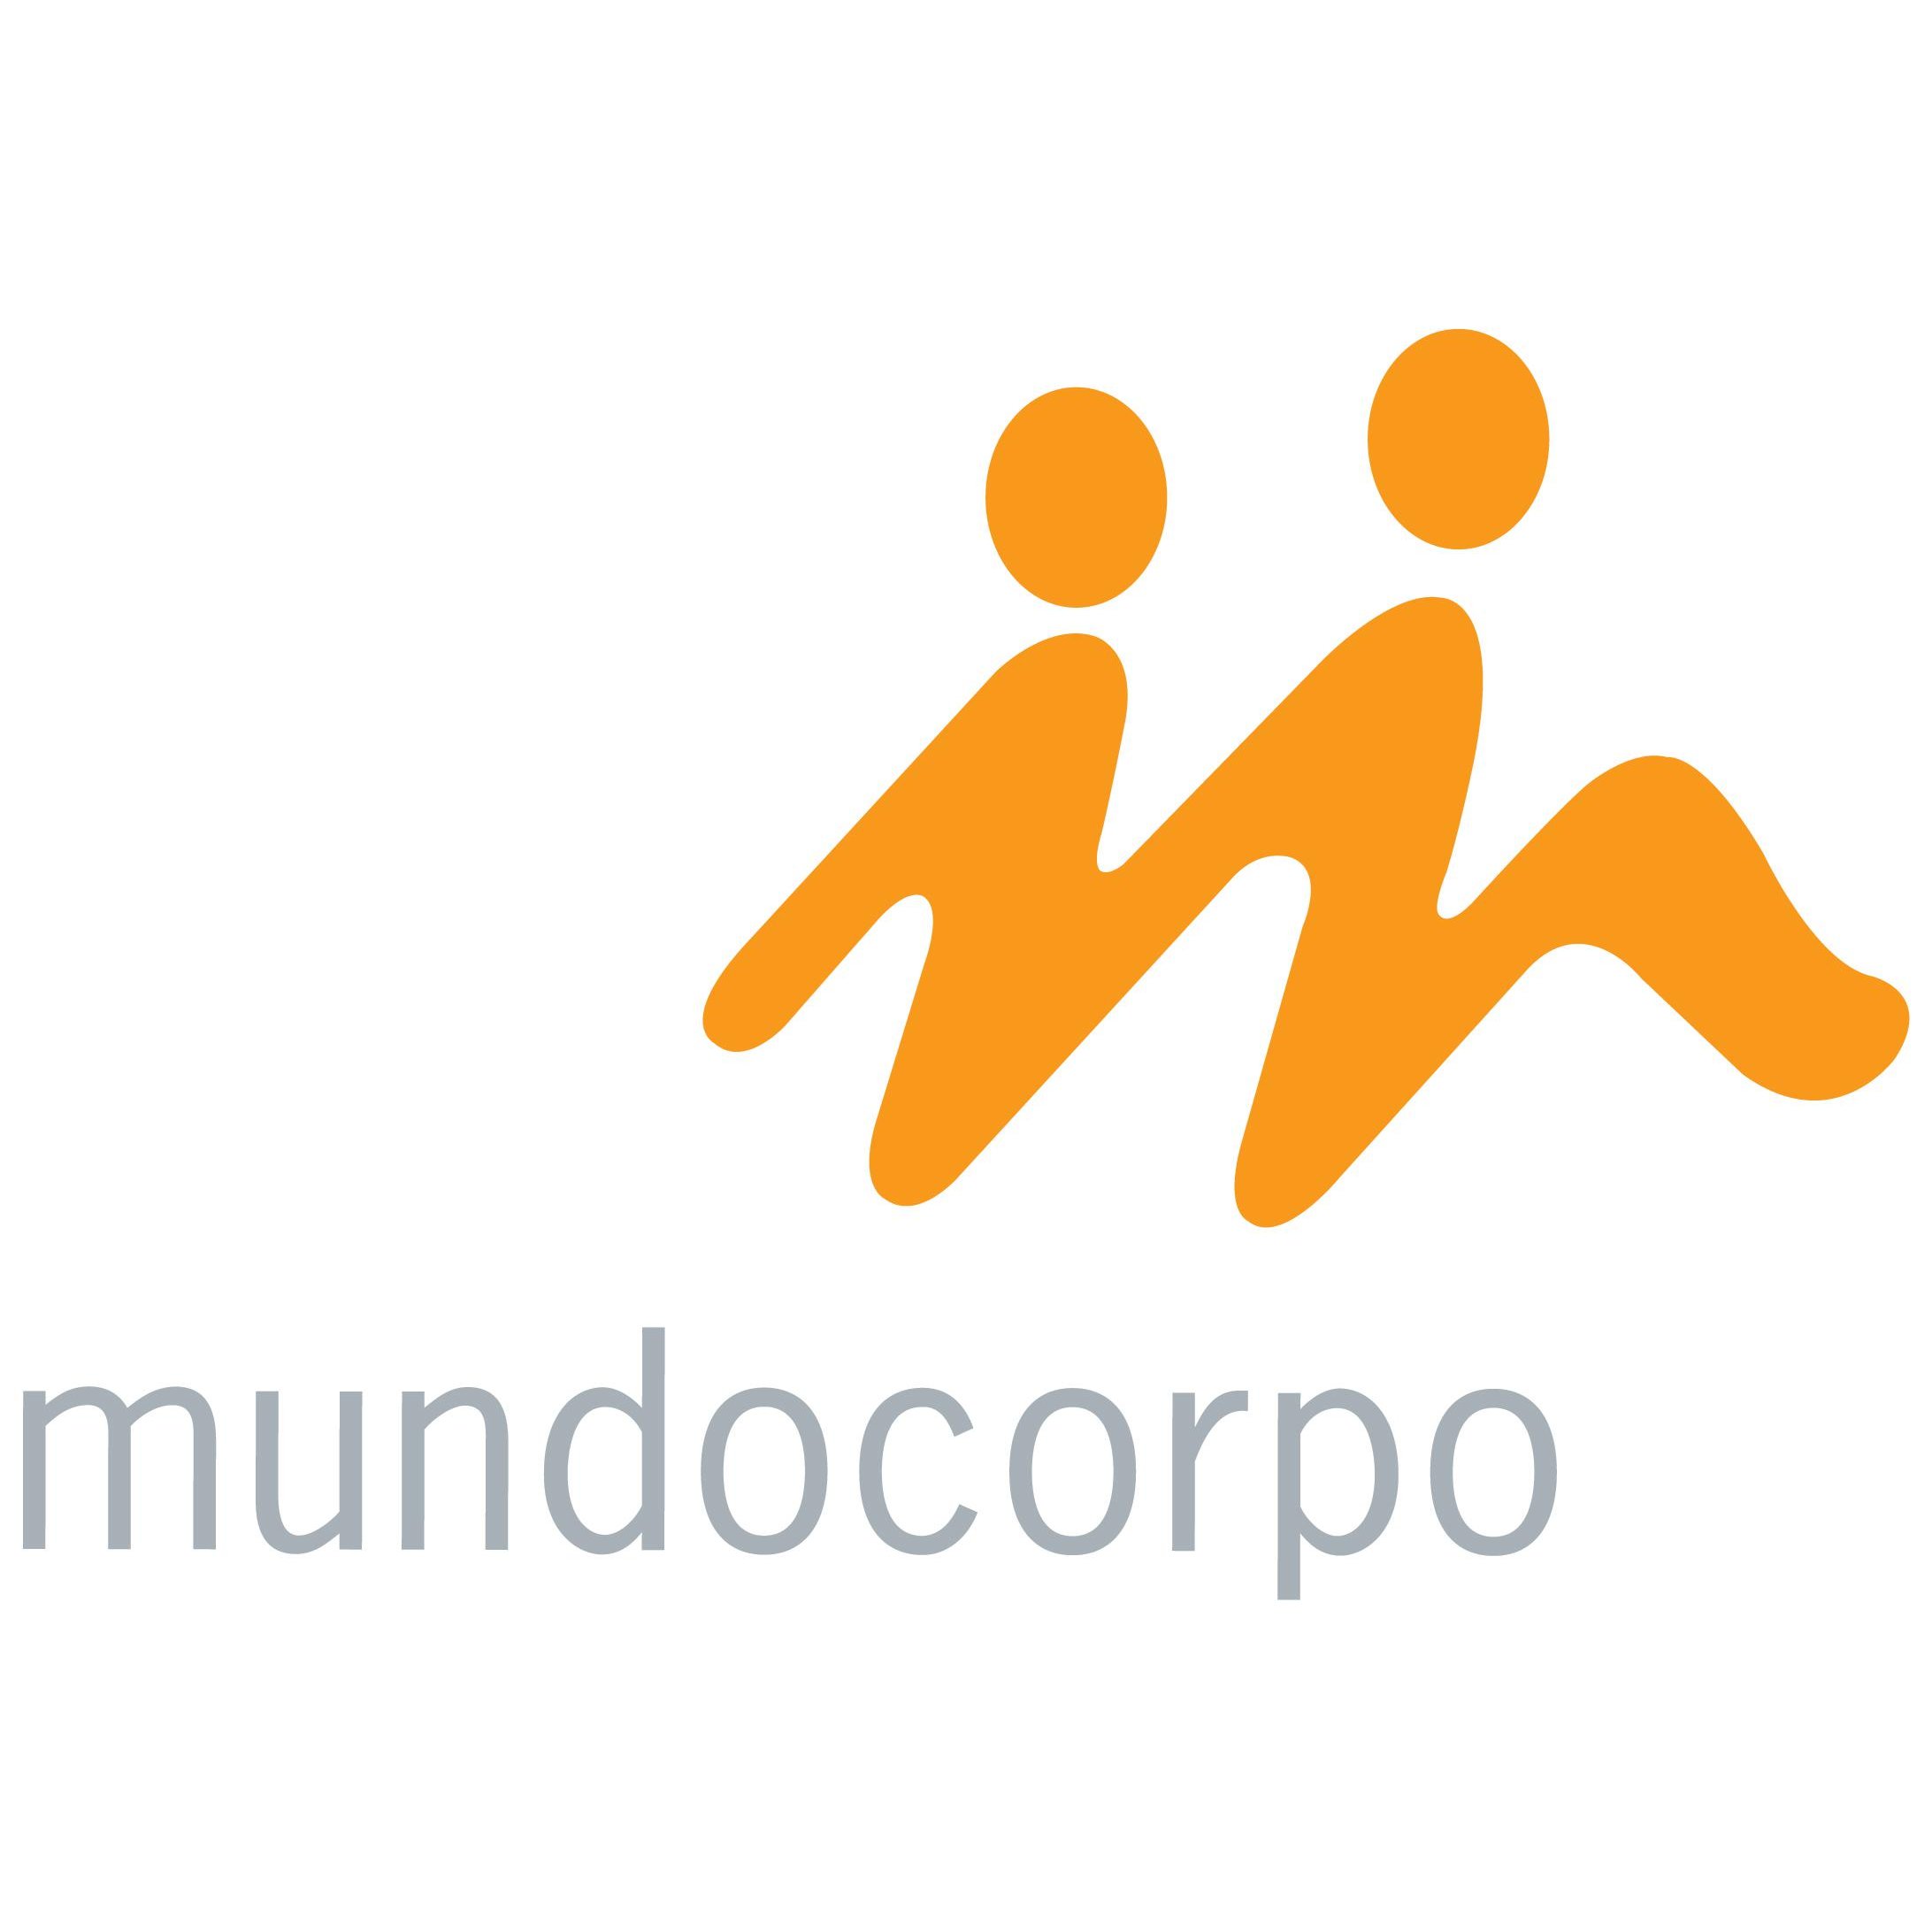 mundocorpo Logo